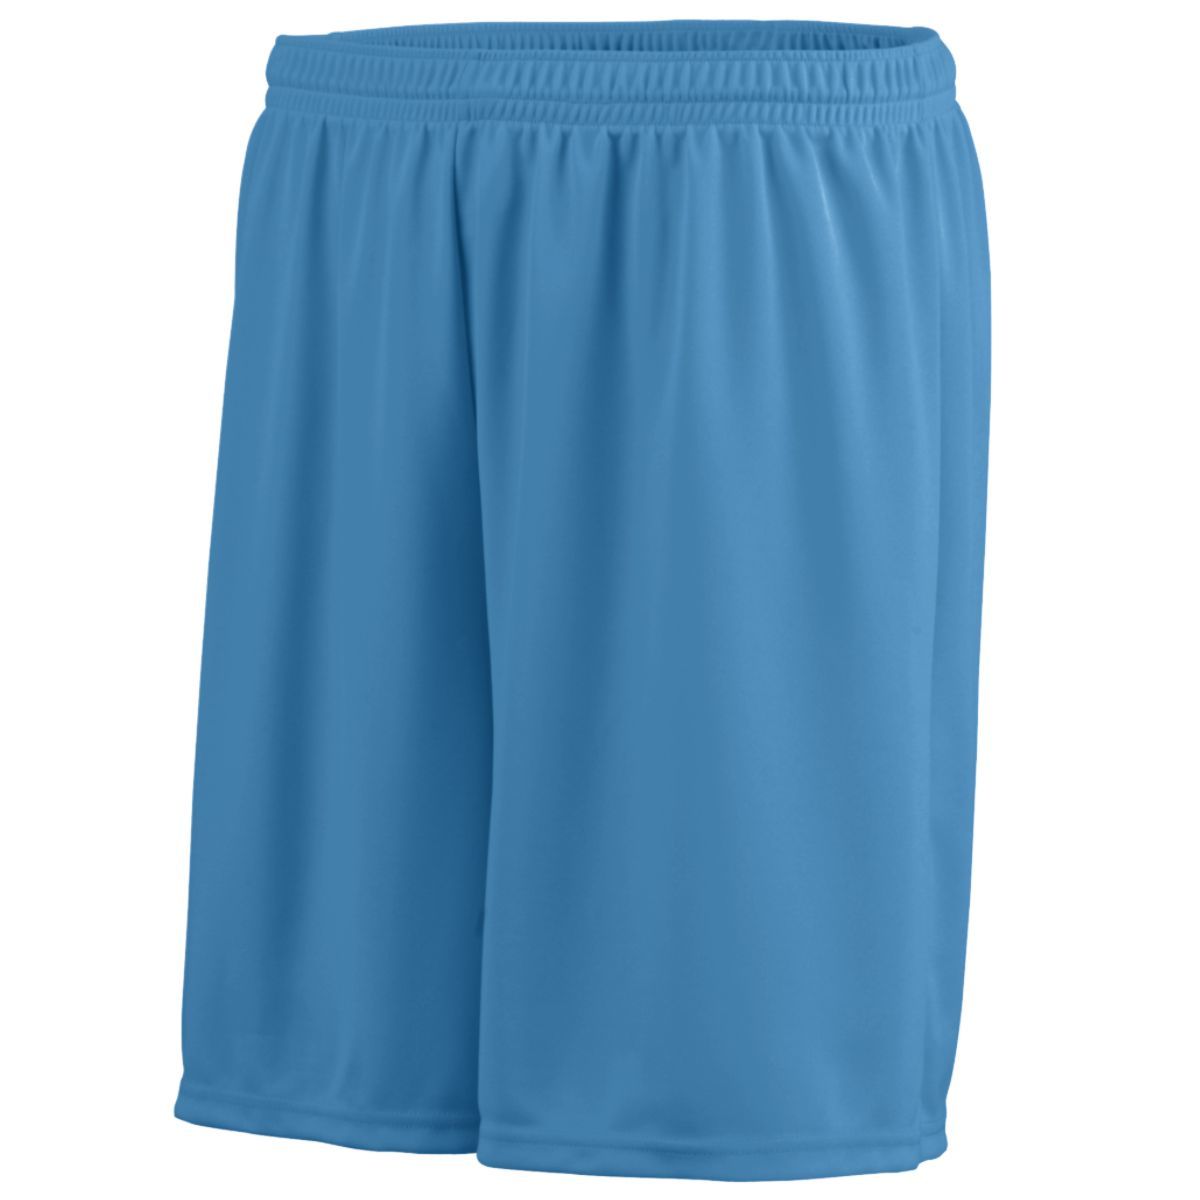 Augusta Sportswear Octane Shorts